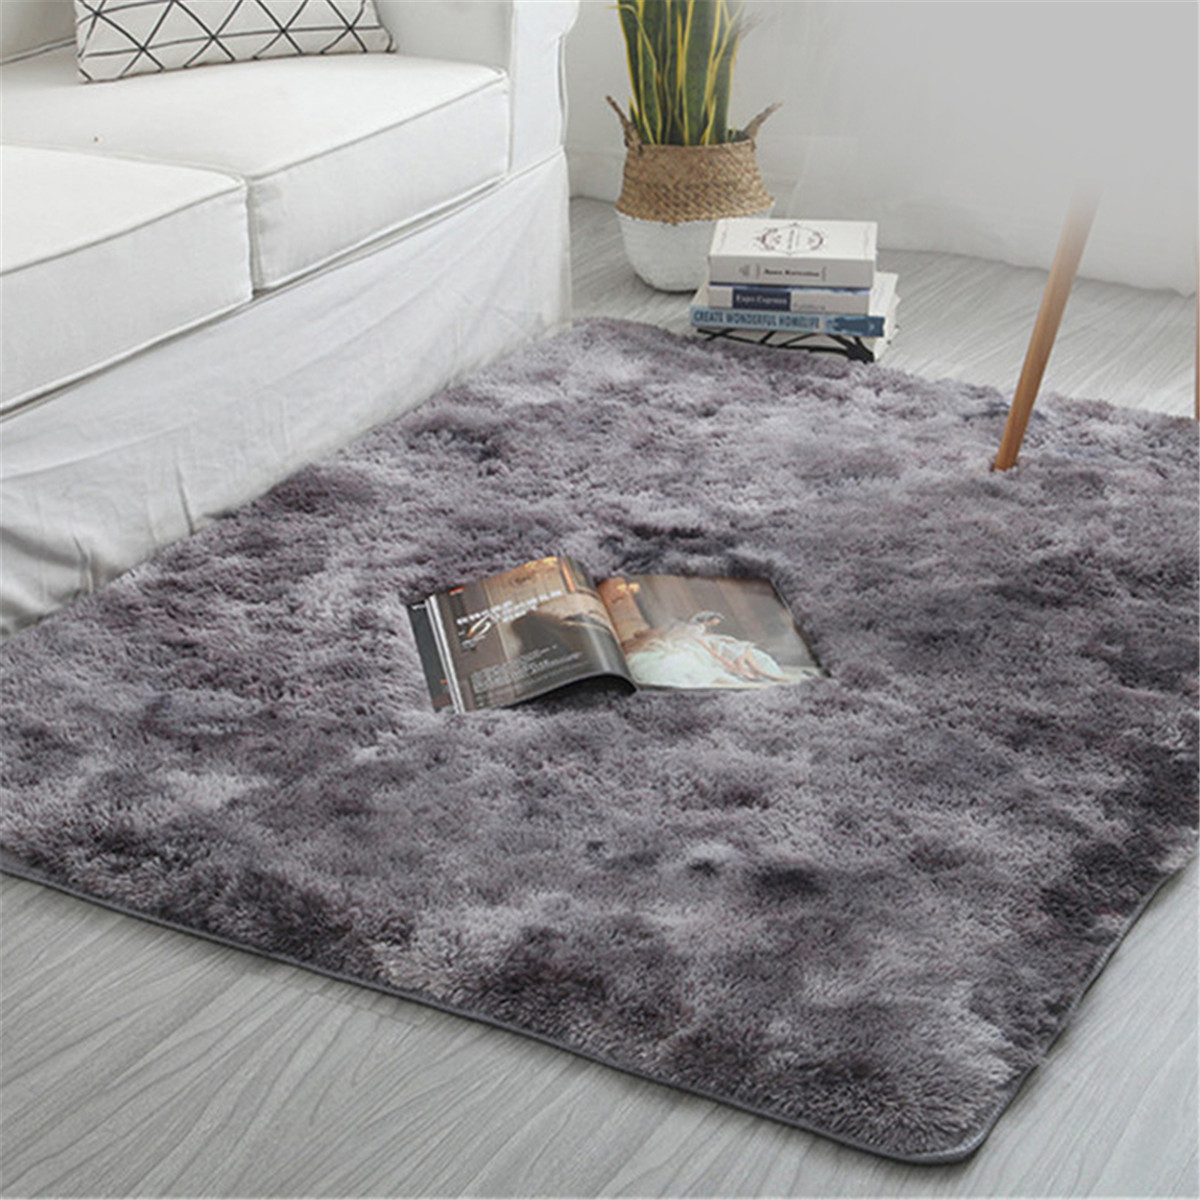 150X240CM-Tie-dyed-Gradient-Carpet-Long-Haired-Anti-slip-Carpet-For-Bedroom-Living-Room-Study-Room-1919744-14